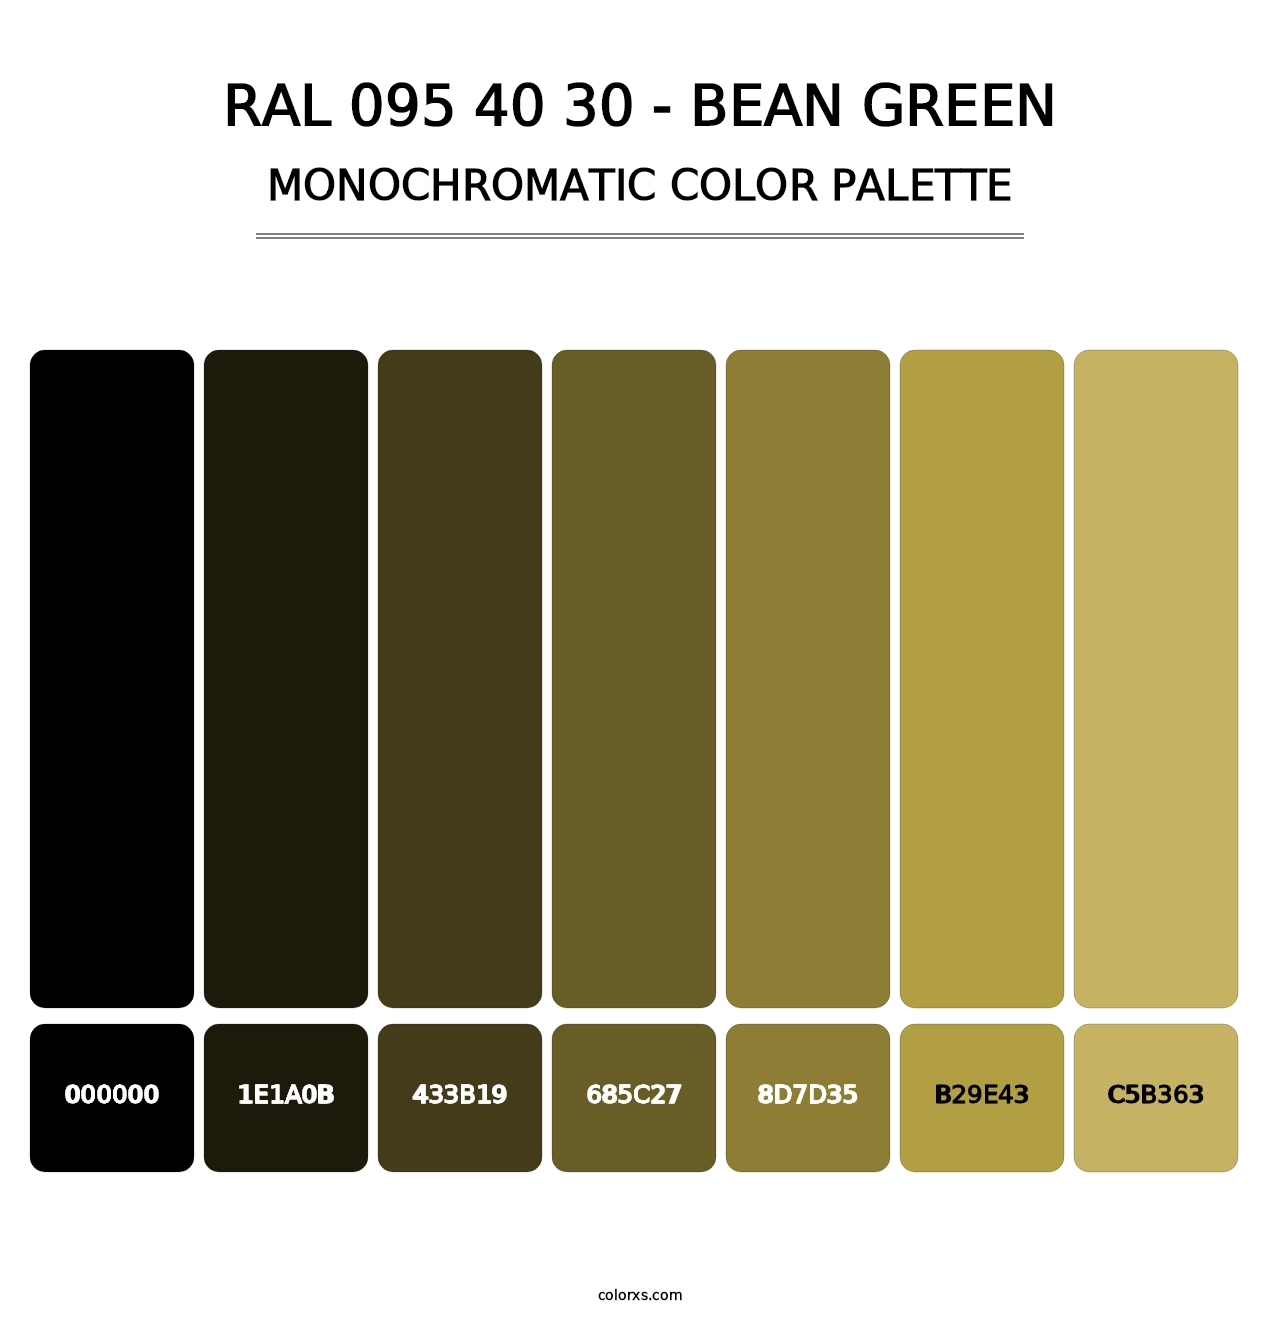 RAL 095 40 30 - Bean Green - Monochromatic Color Palette